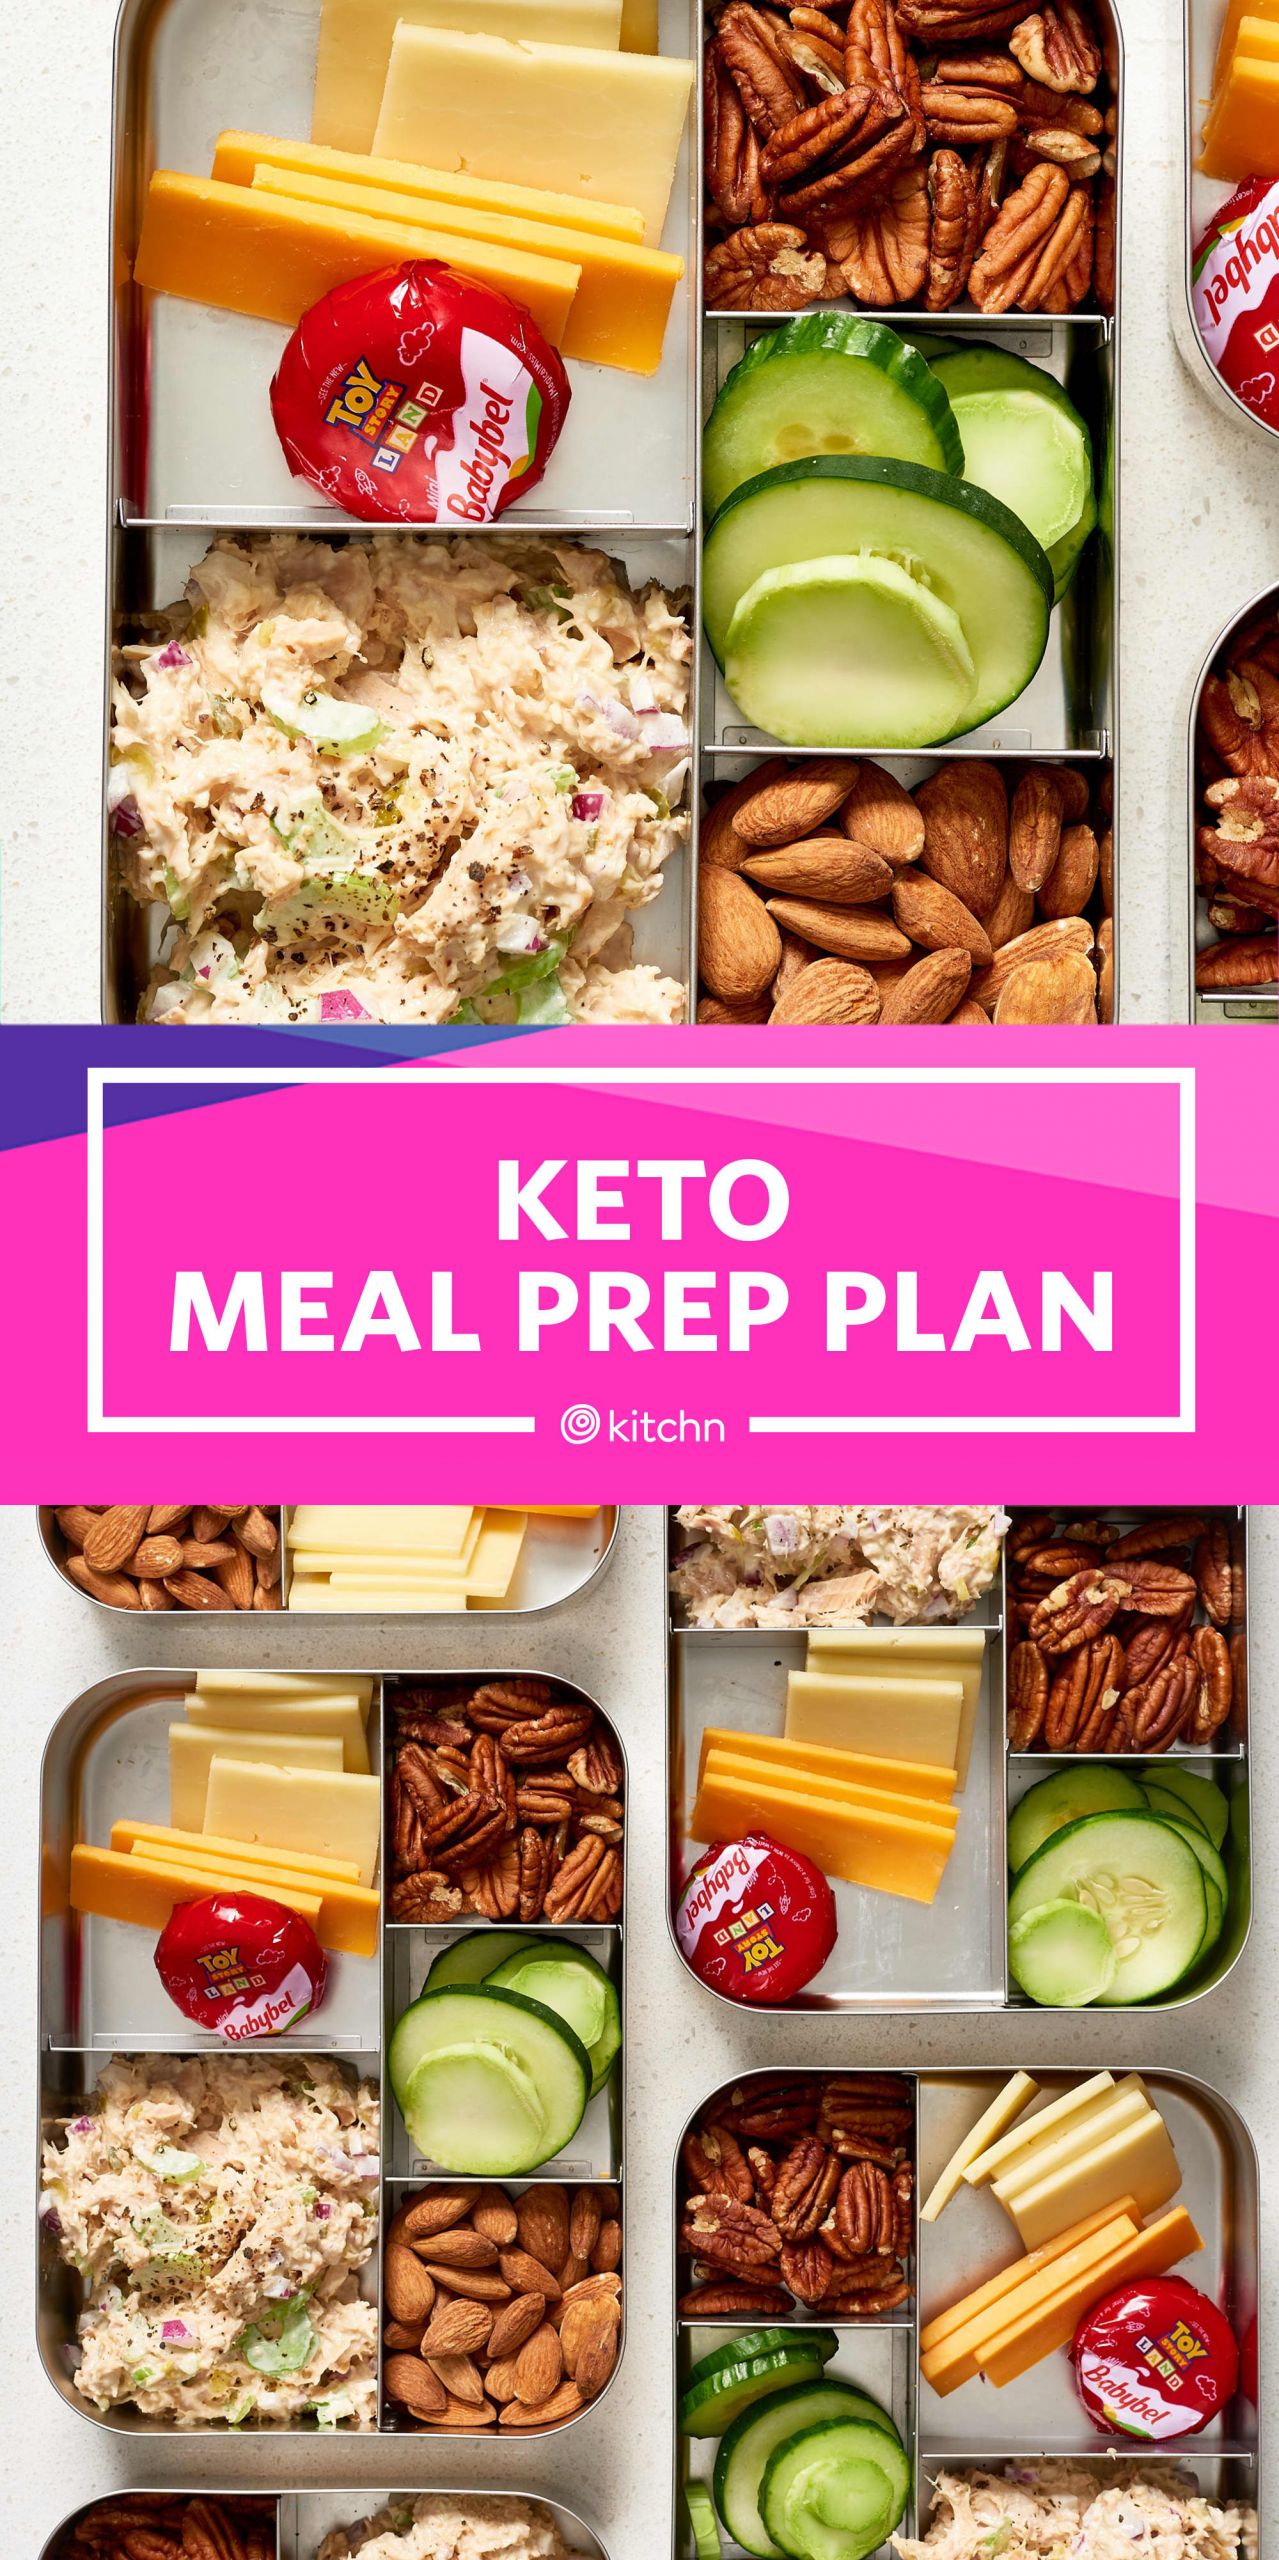 Keto Diet Meal Prep For The Week
 Fast Keto Meal Prep in Under 2 Hours